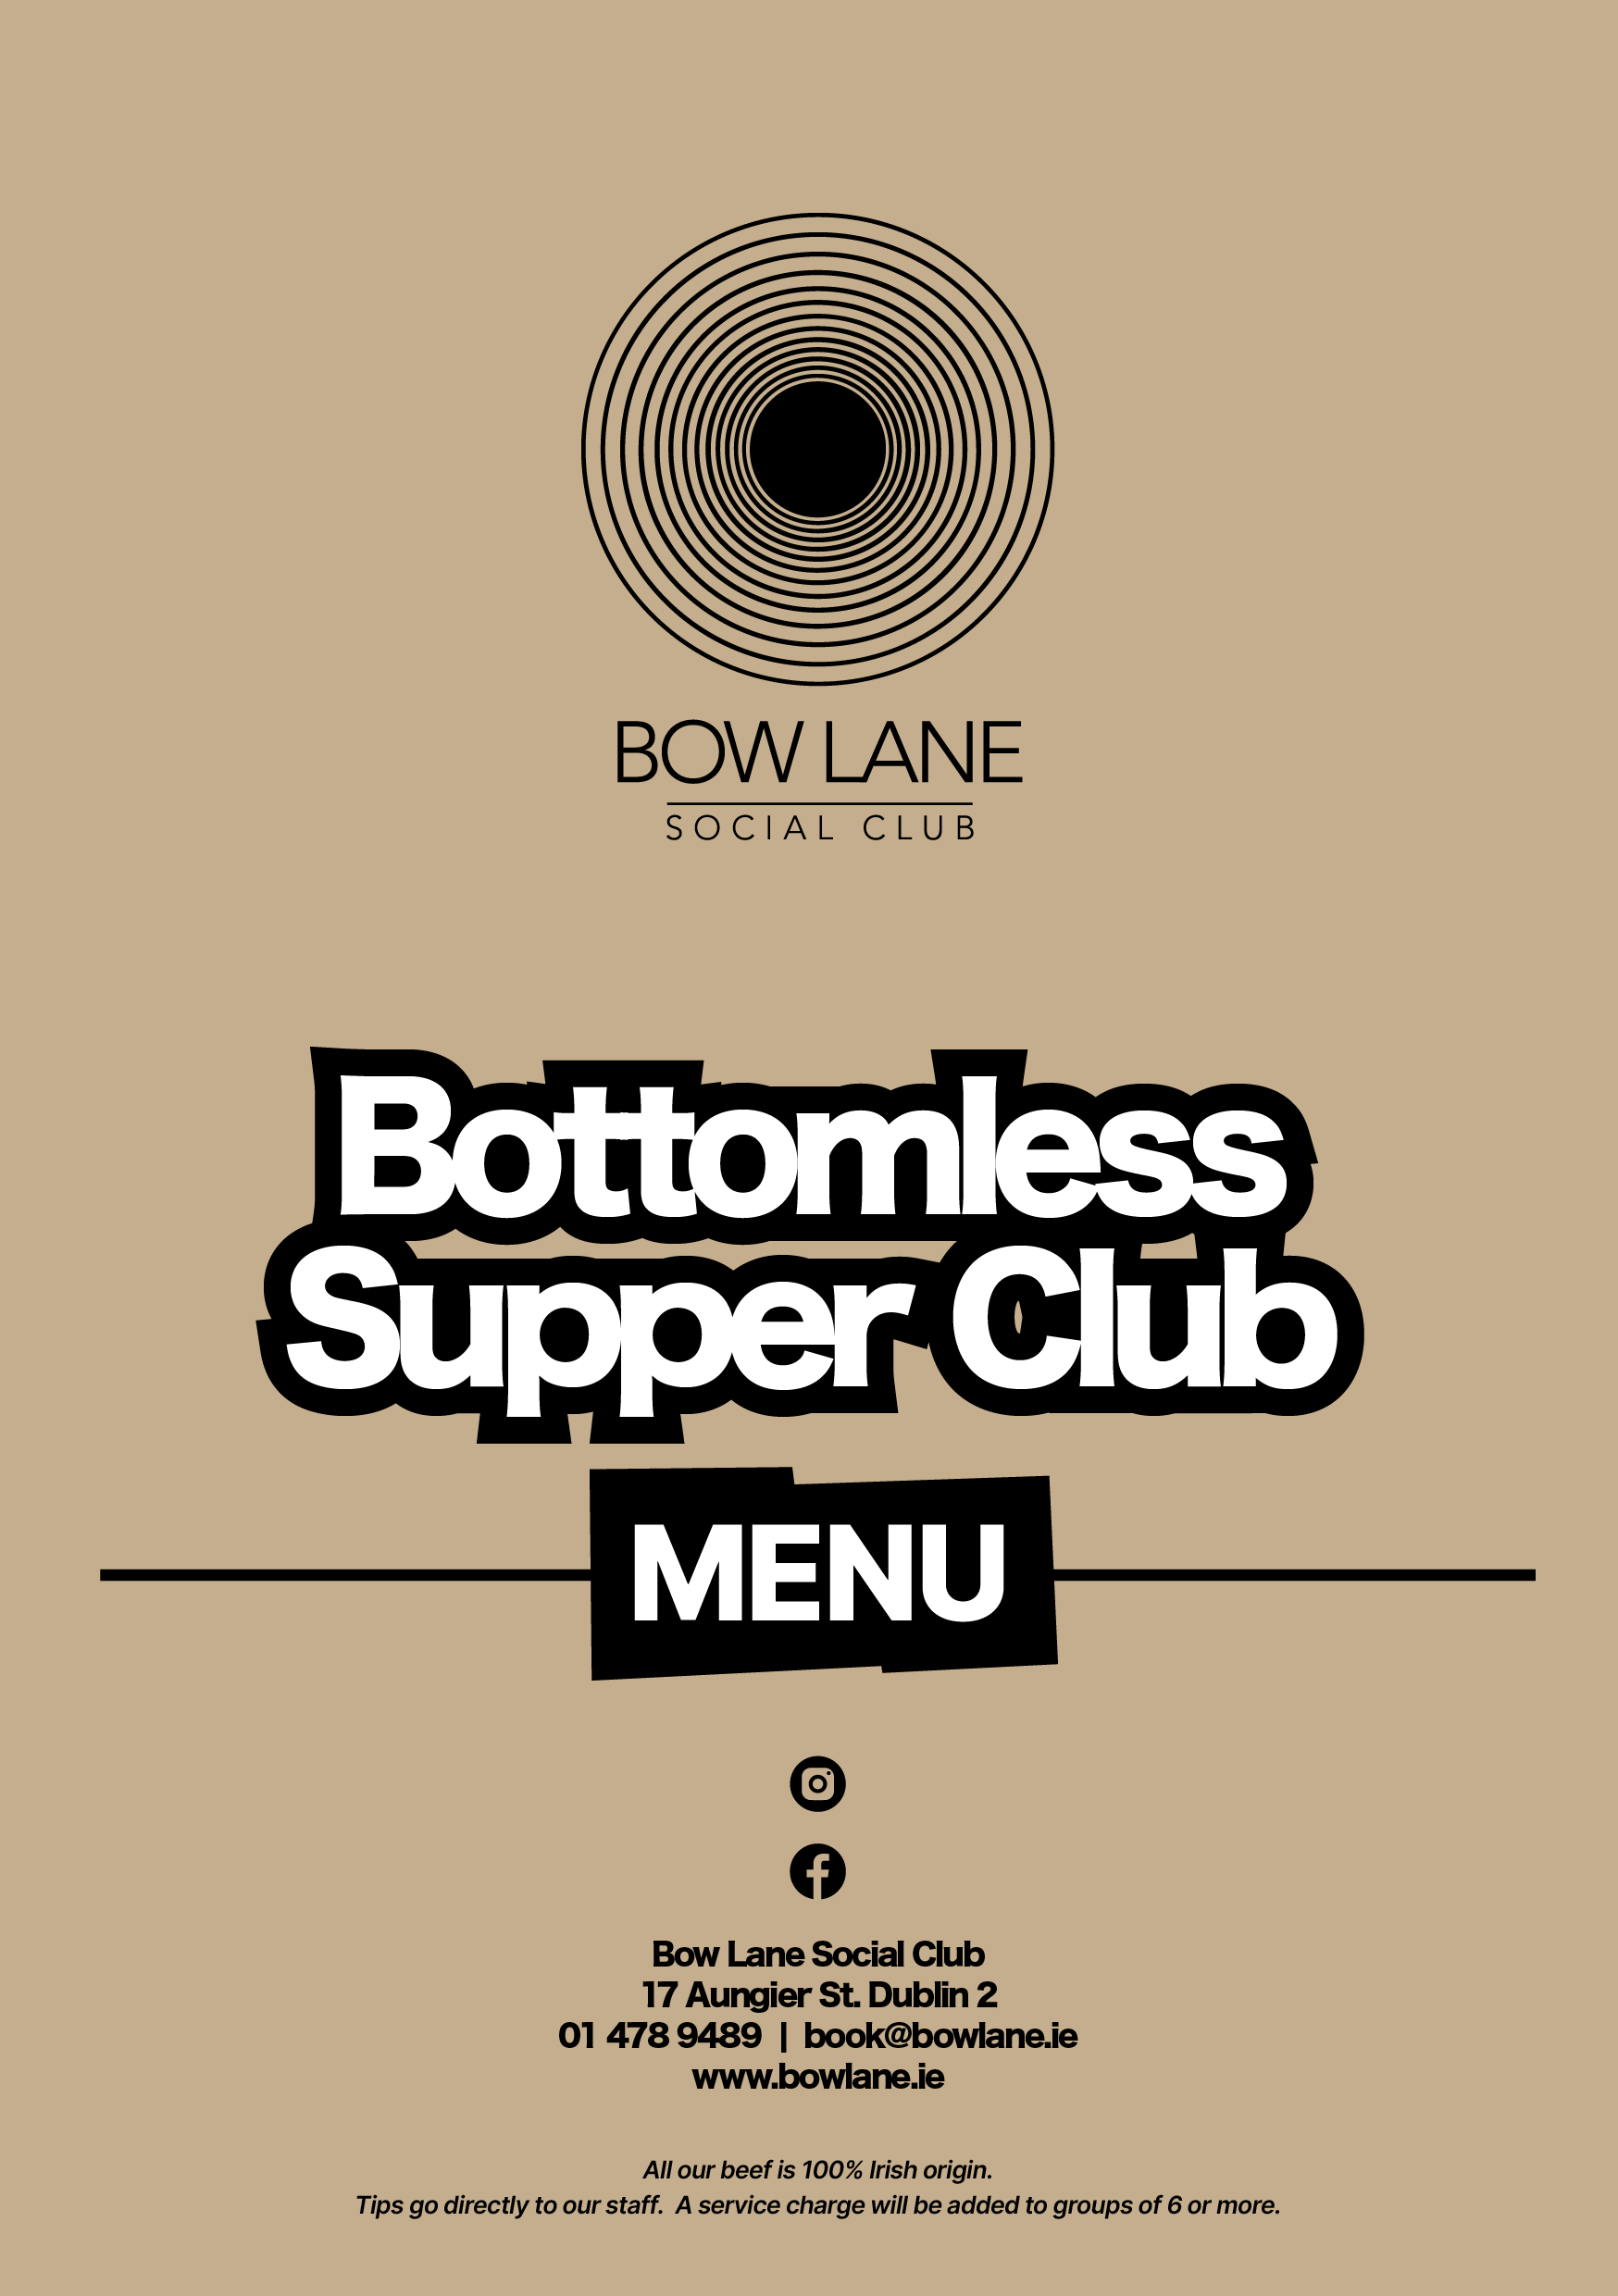 Bottomless Supper Club - Bowlane Social